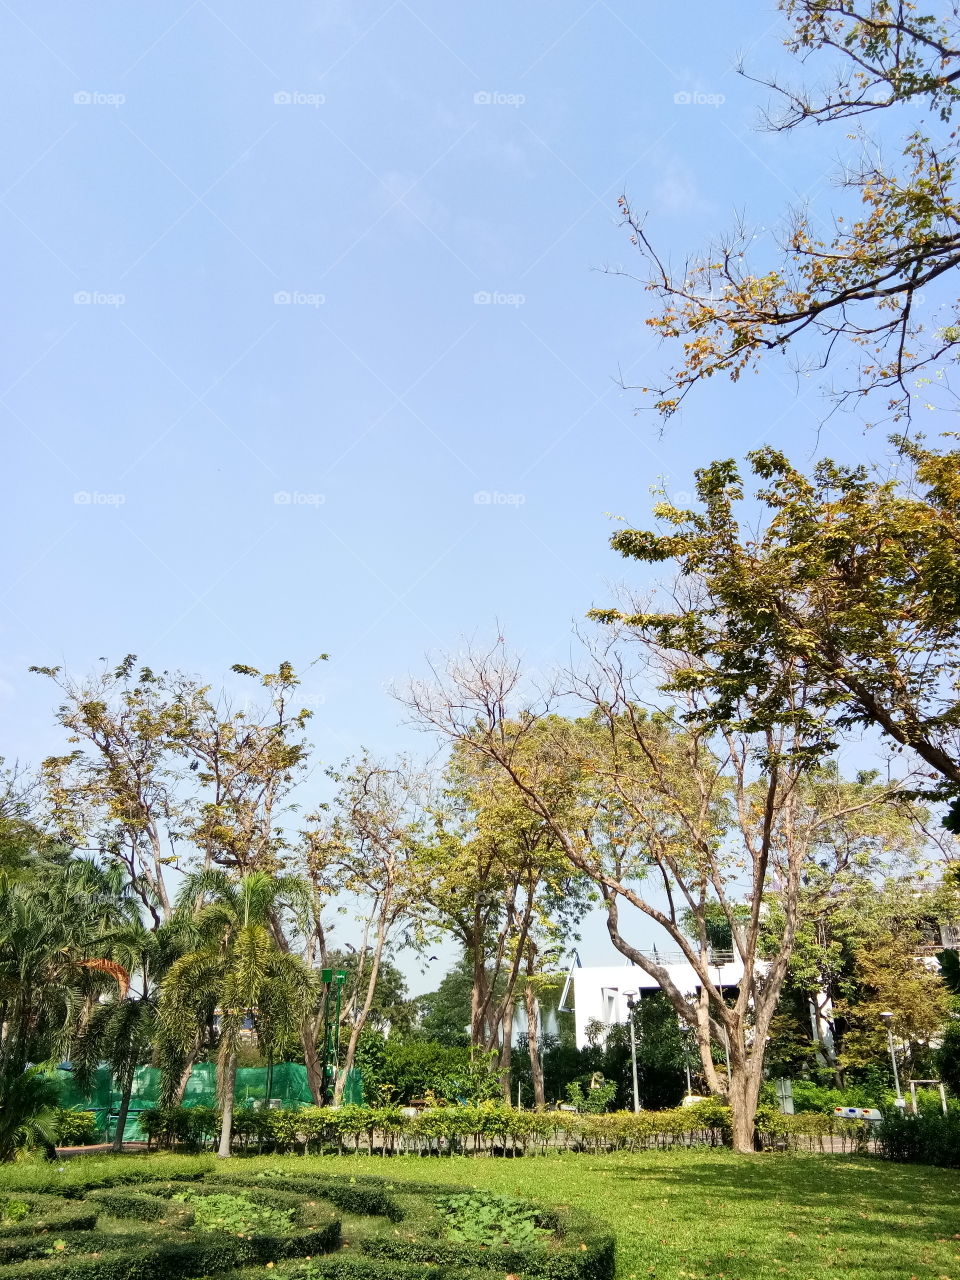 tree
park
garden
view
greenery
green
beautiful
sky
flower
sala thai
ruen thai
home